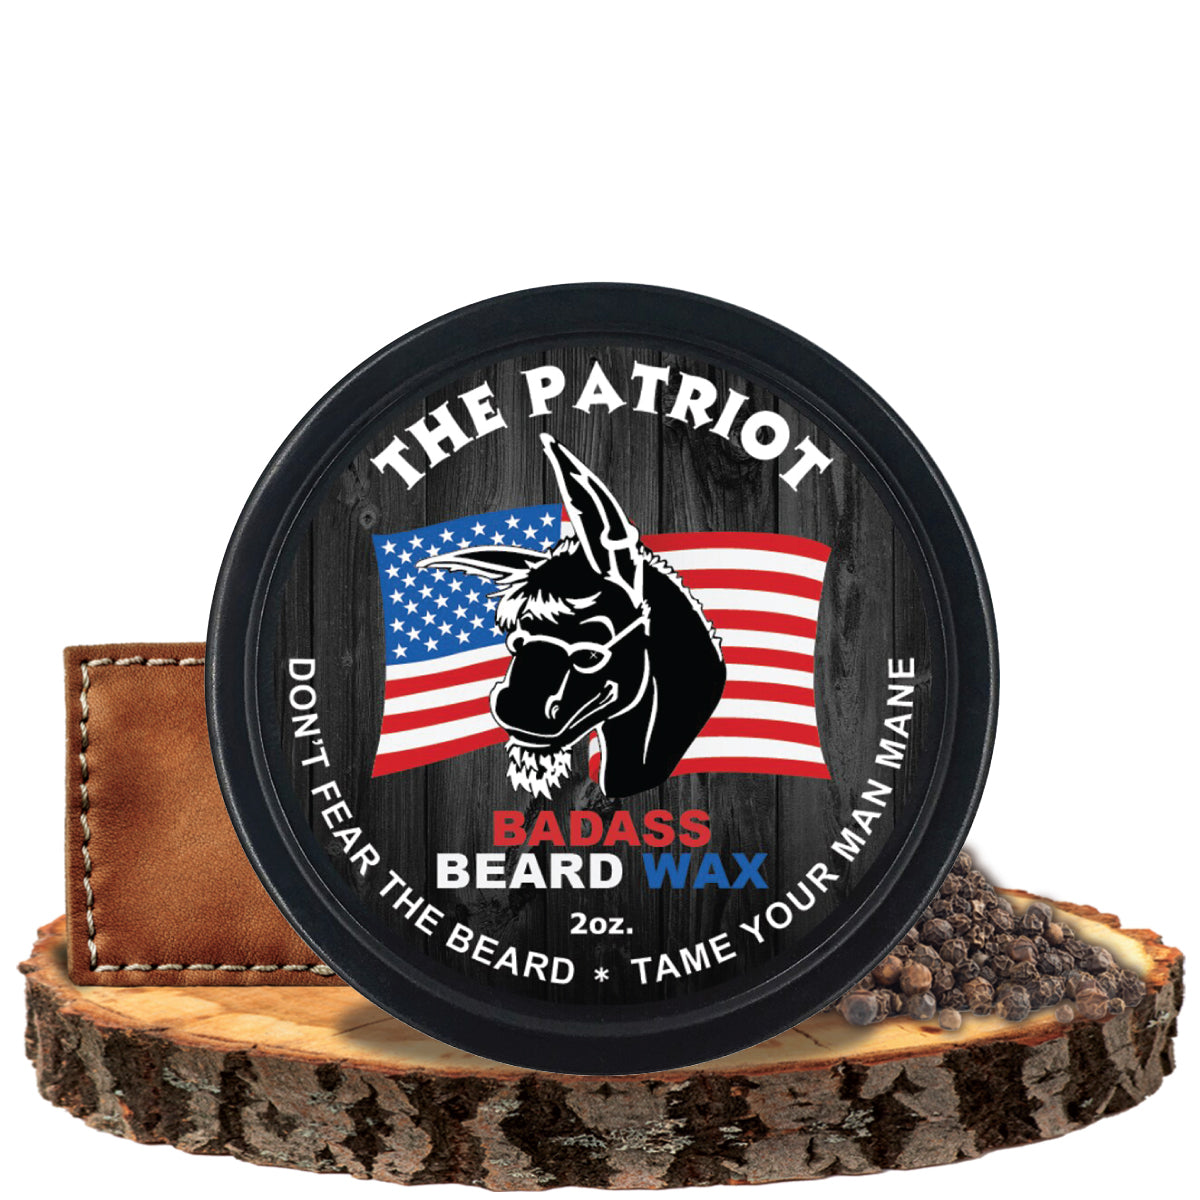 Badass Beard Wax - The Patriot